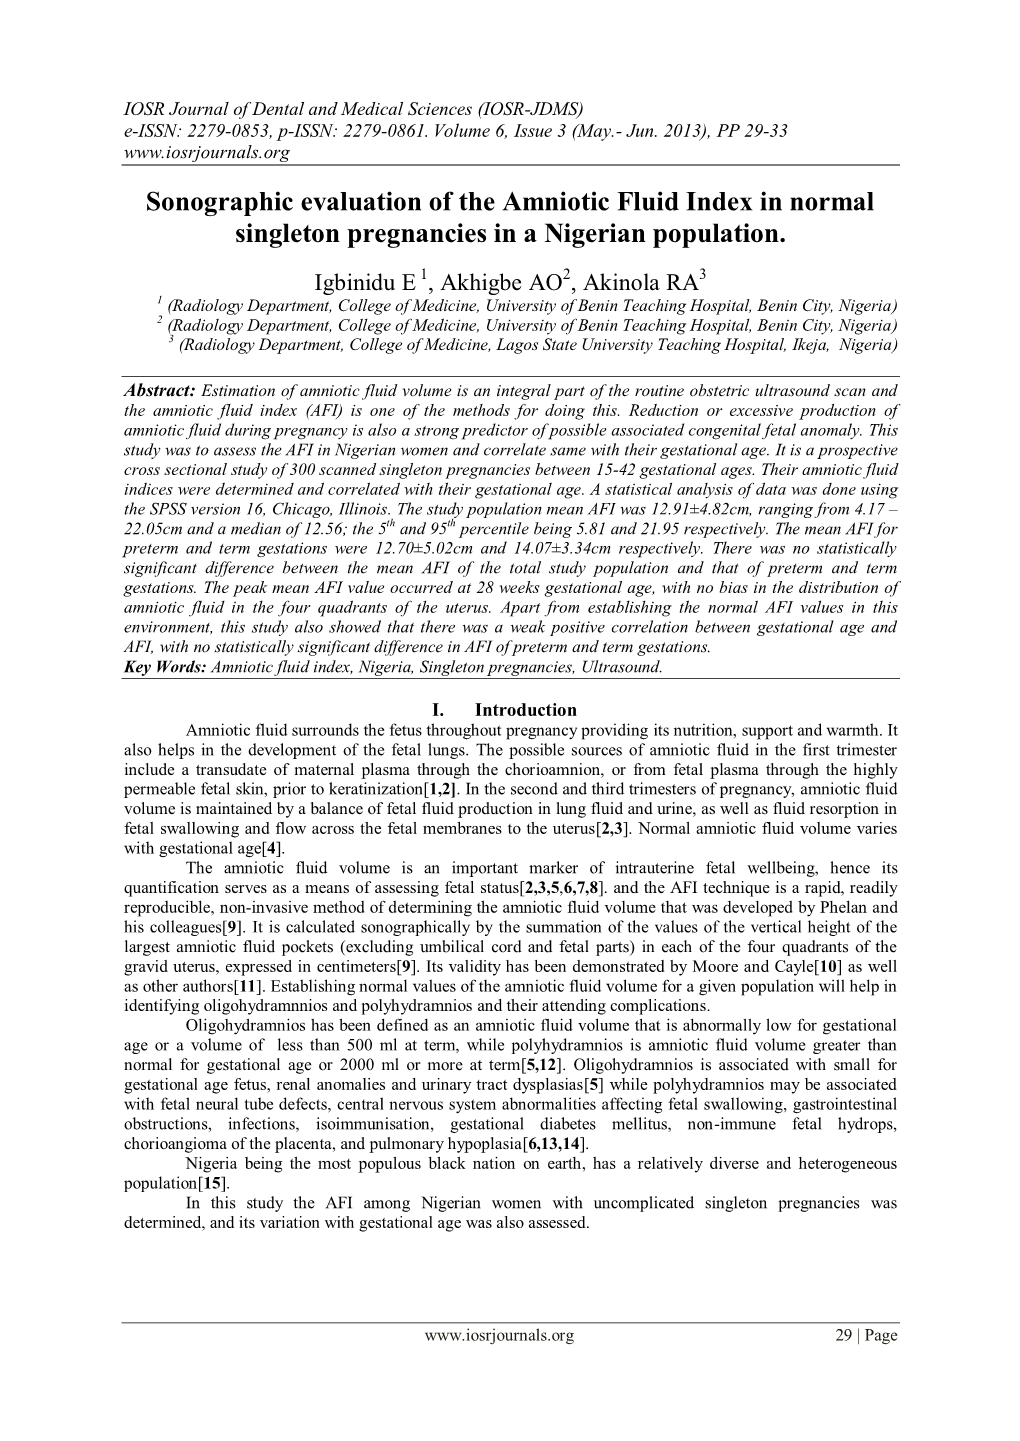 Sonographic Evaluation of the Amniotic Fluid Index in Normal Singleton Pregnancies in a Nigerian Population